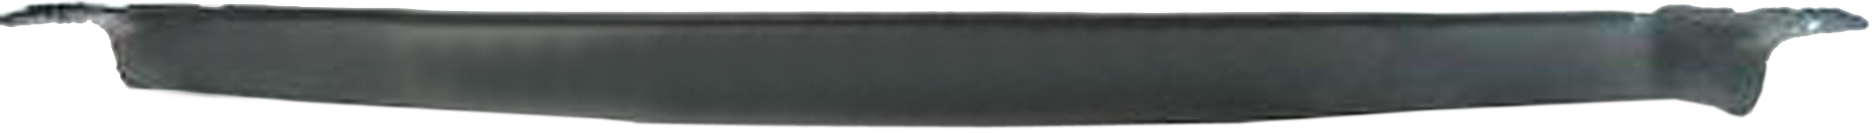 Aftermarket APRON/VALANCE/FILLER PLASTIC for GMC - R1500 SUBURBAN, R1500 SUBURBAN,87-91,Front bumper deflector